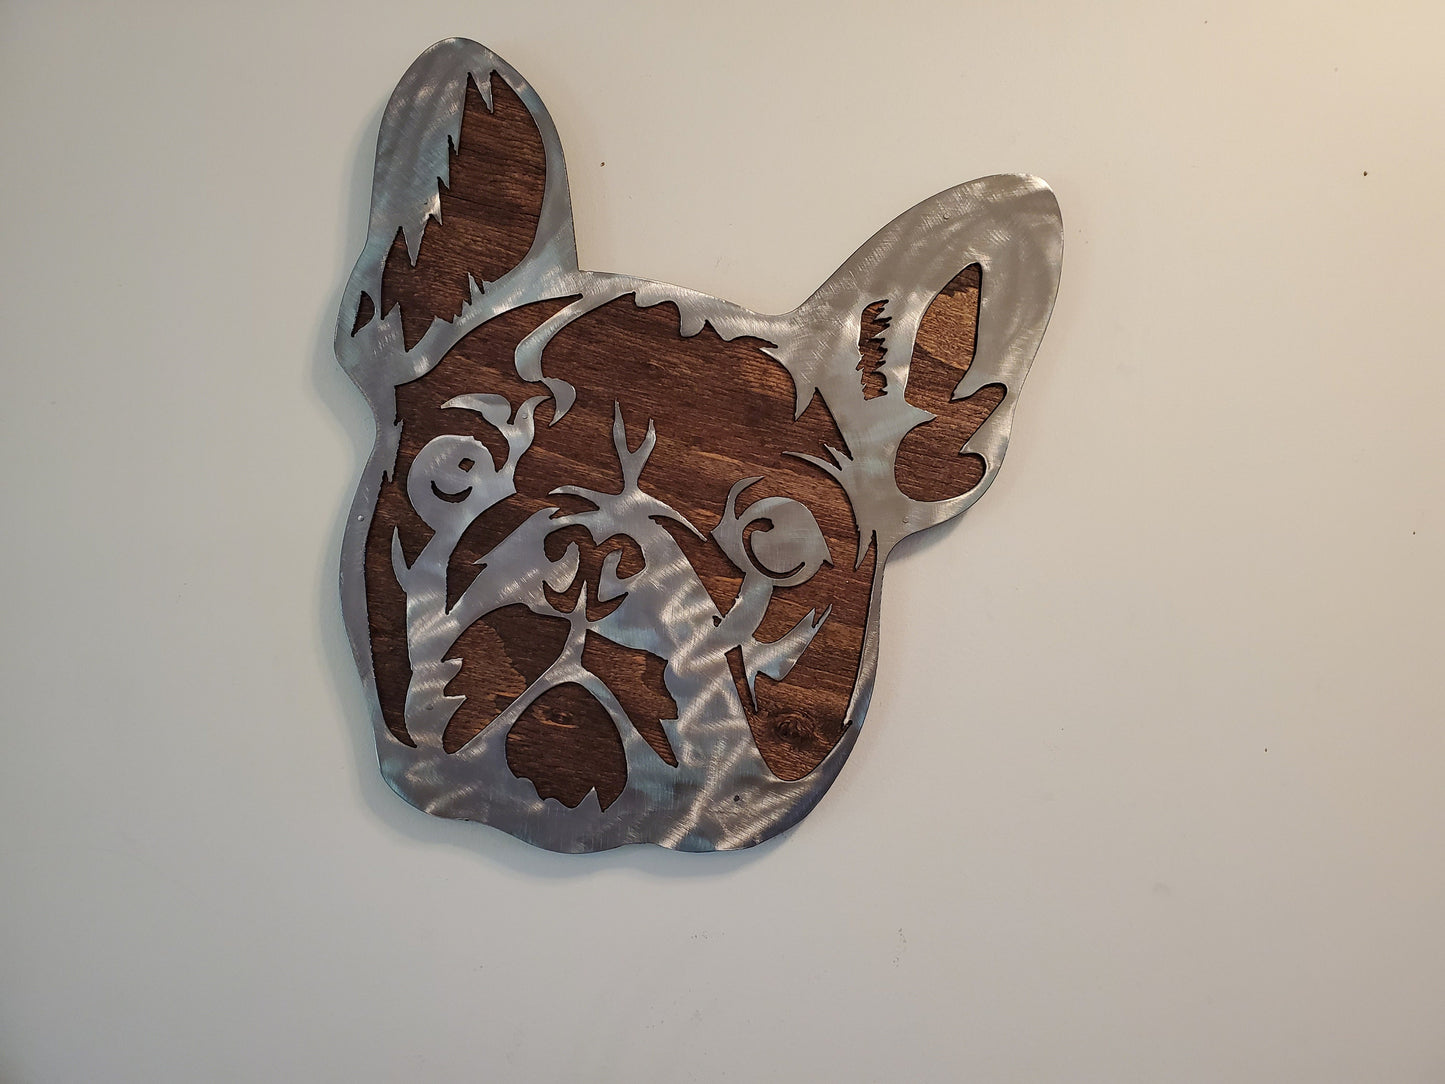 French Bulldog Metal Art on Wood